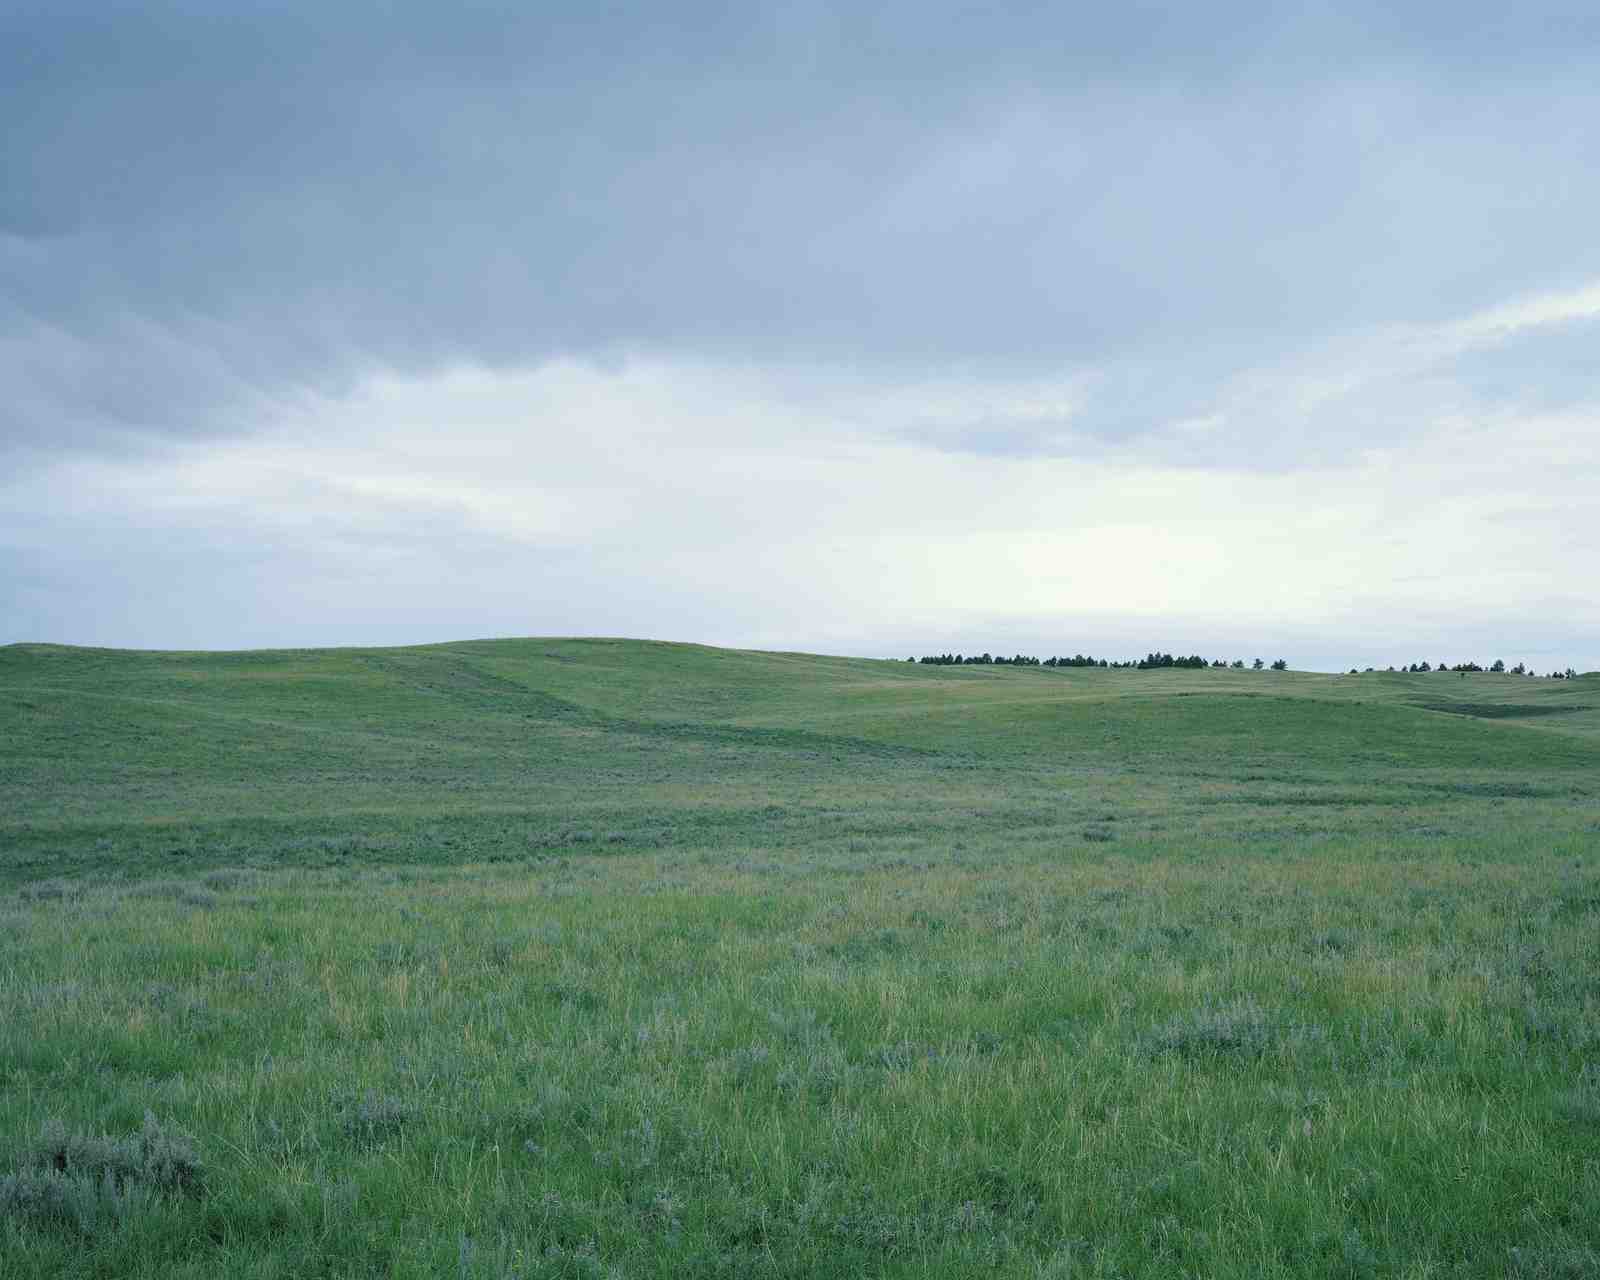 generic grassy landscape with centered horizon